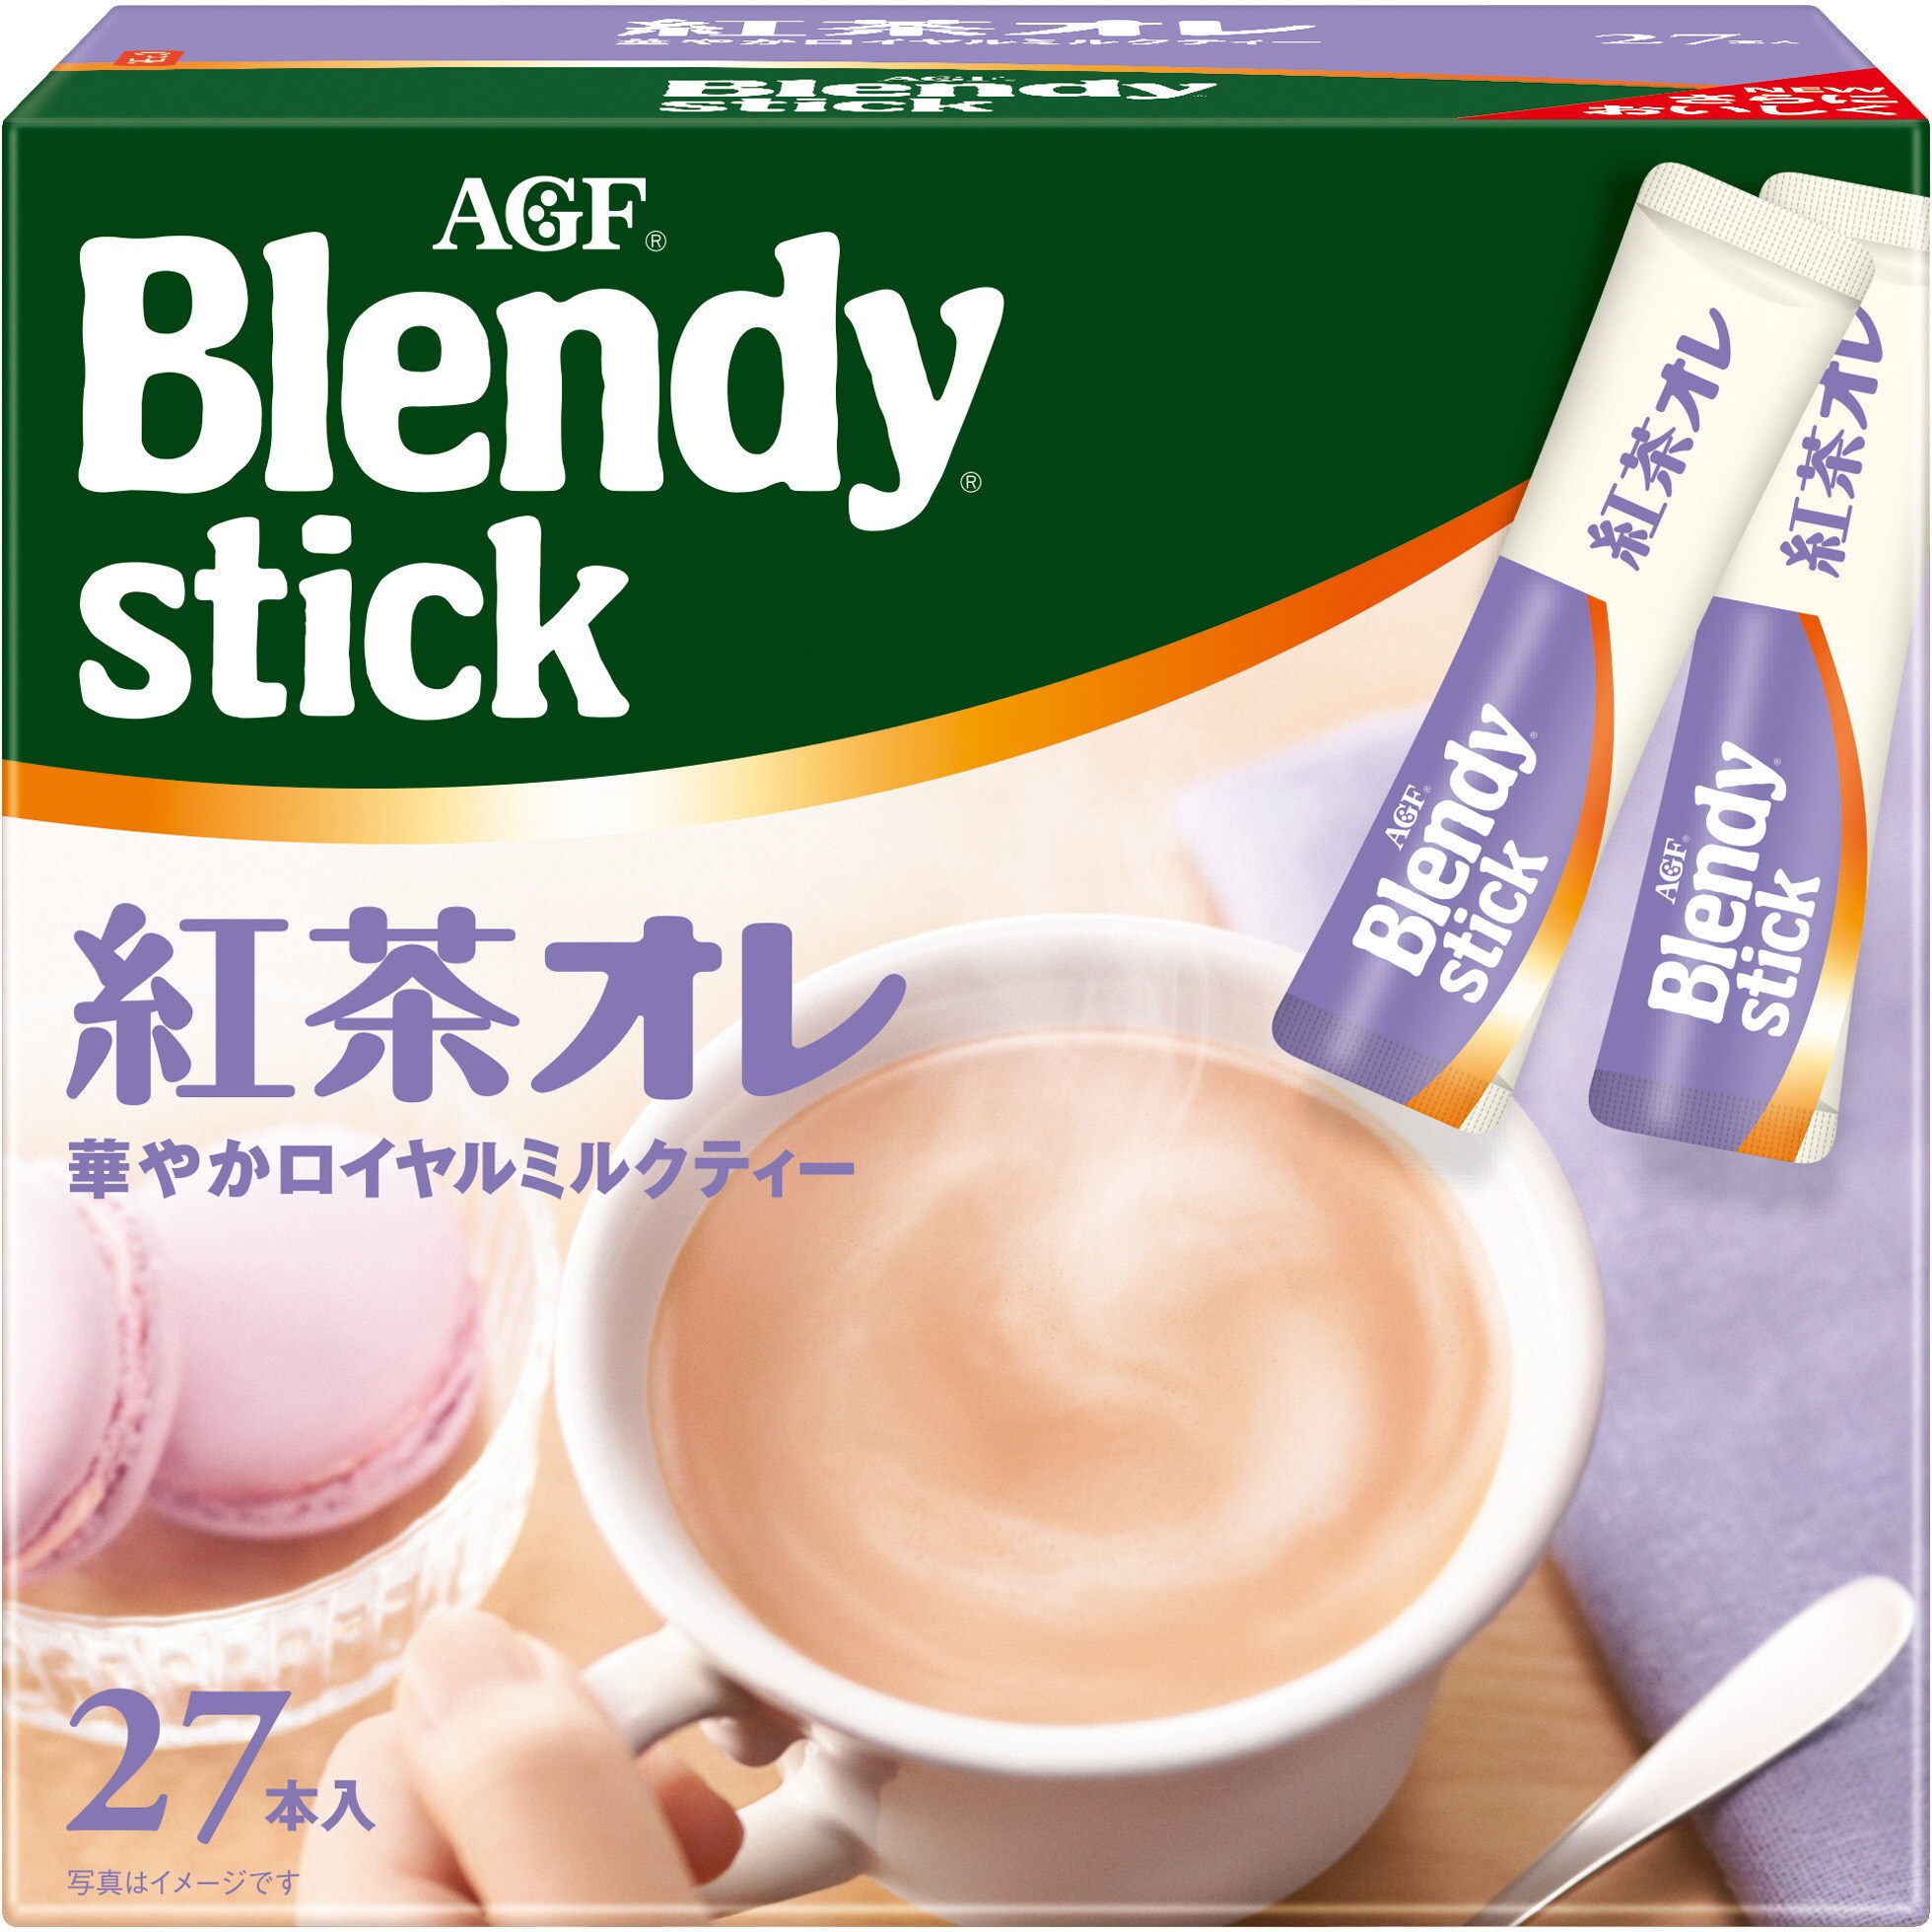 AGF ブレンディ カフェラトリー スティック 芳醇アップルティー 紅茶(7本入*6箱セット)